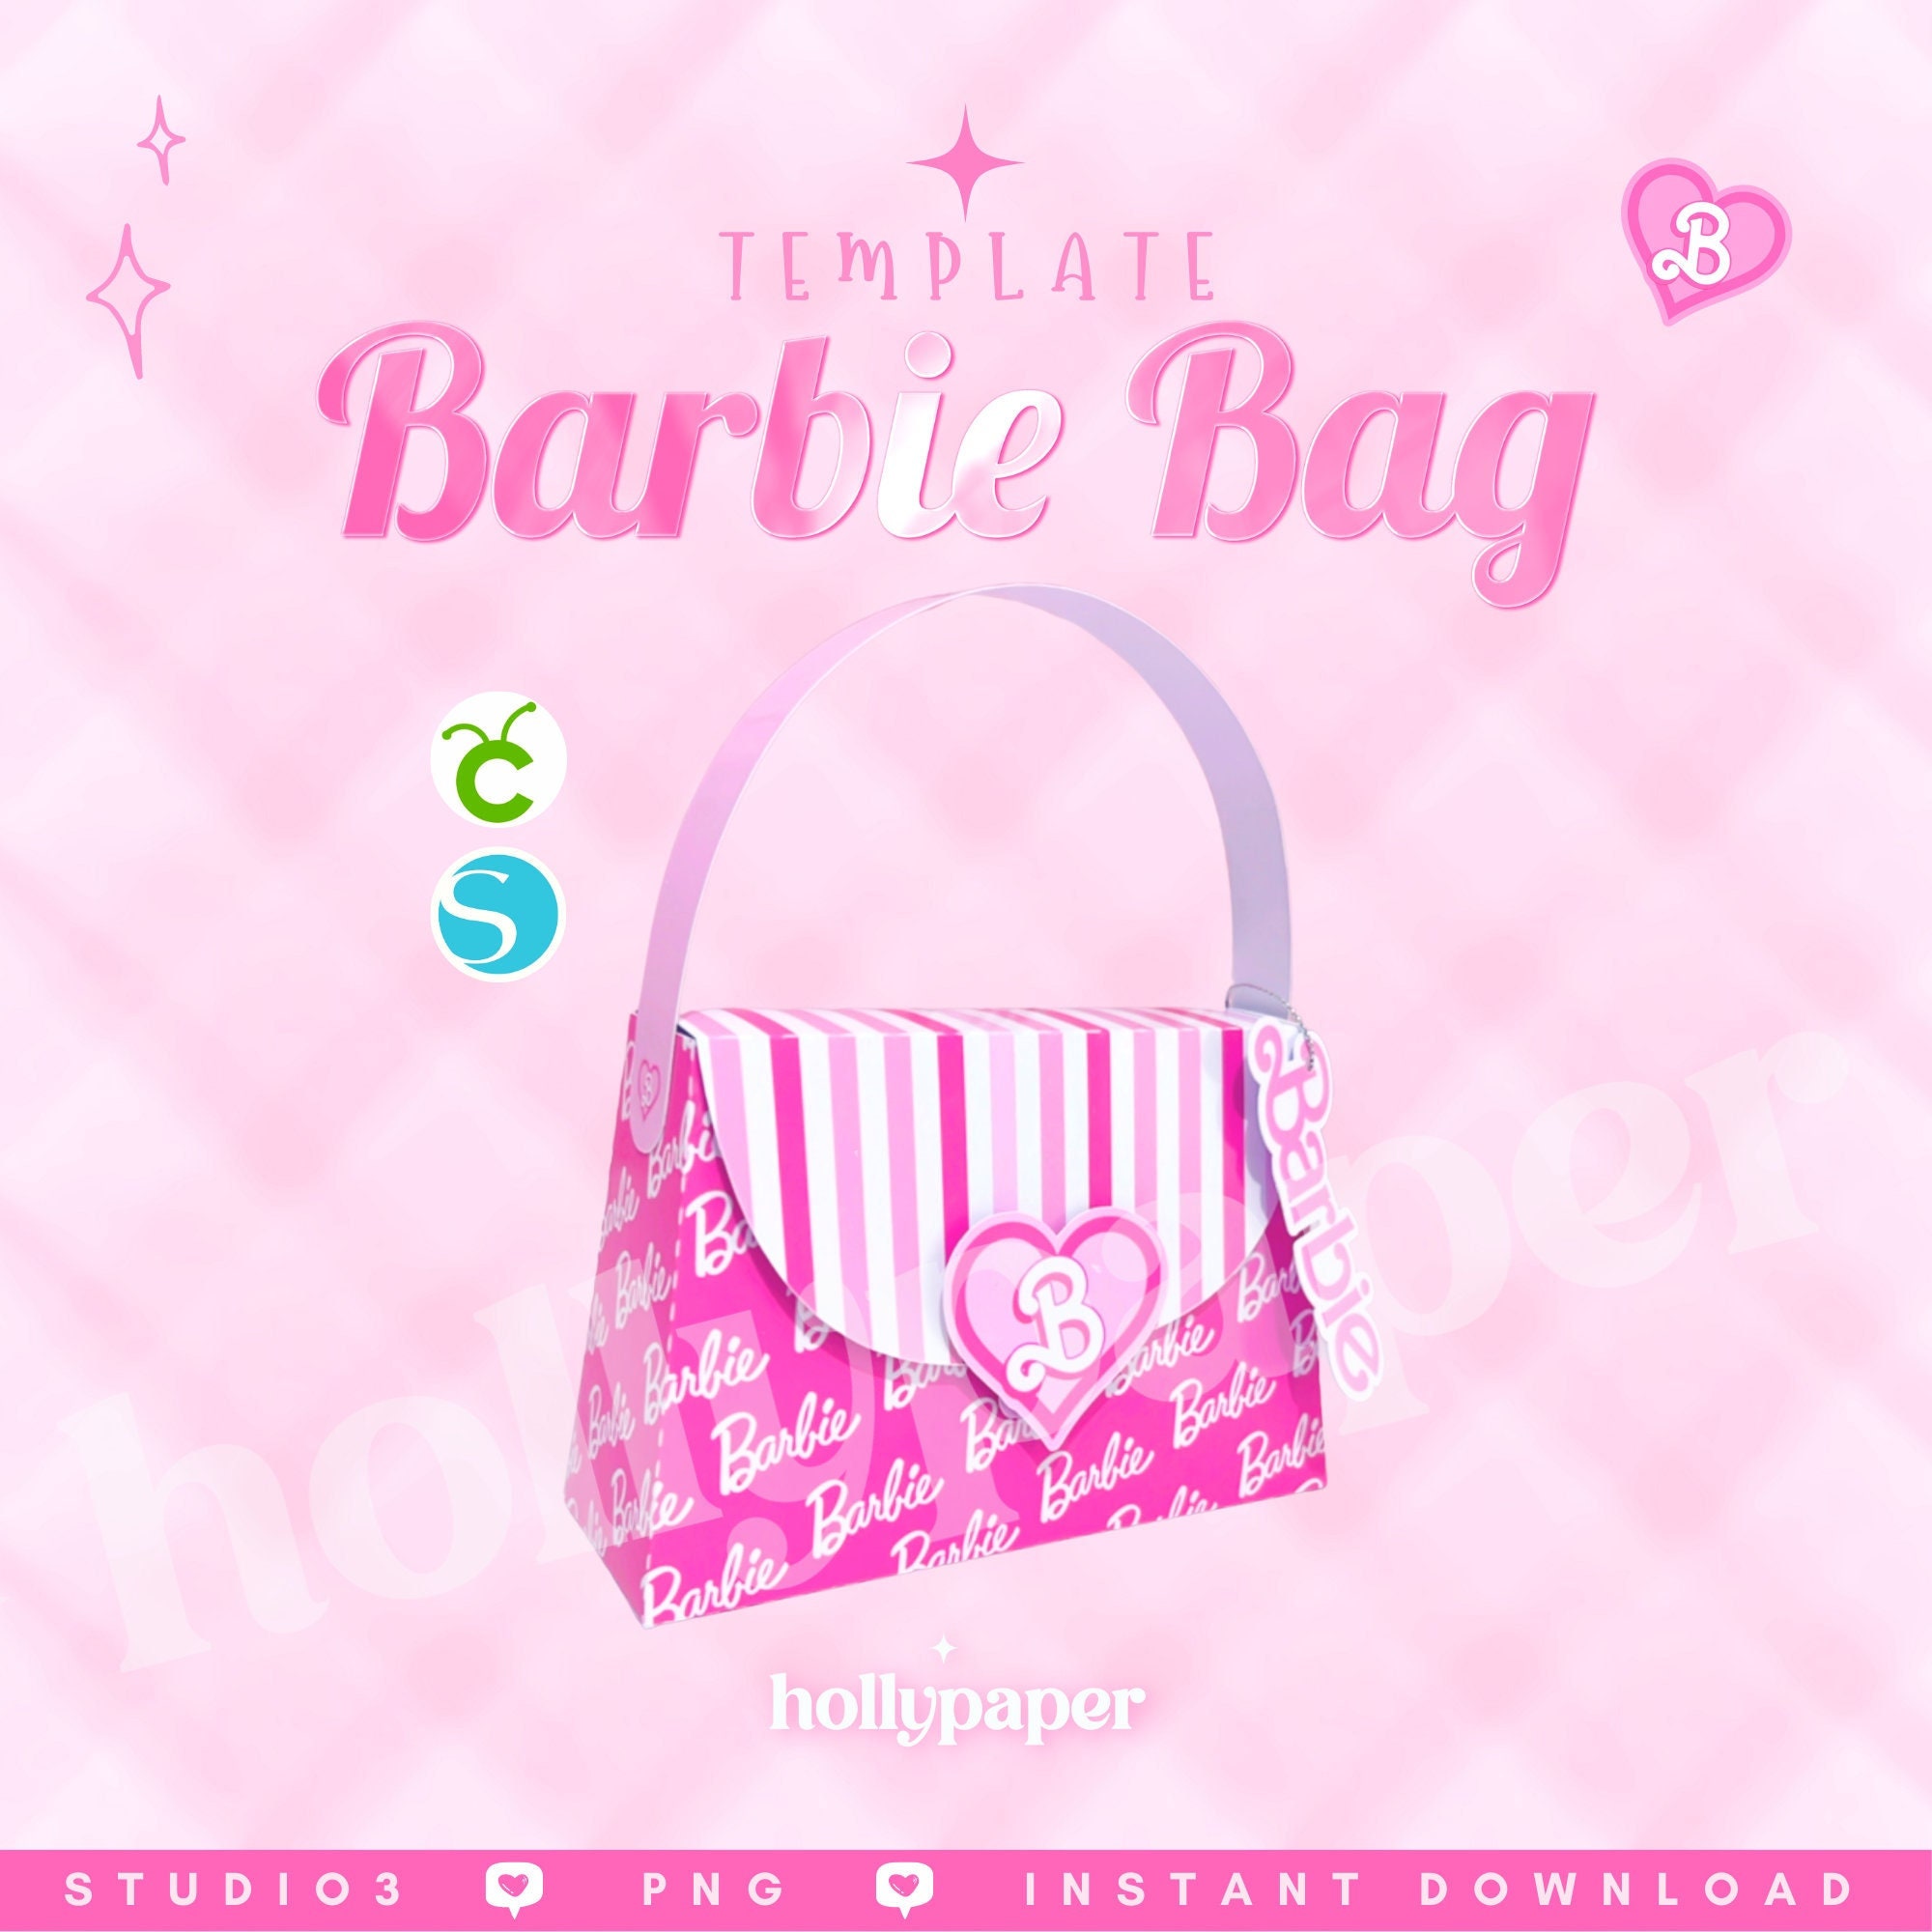 Barbie Bag Template Barbie Bag Barbie Bag Template Barbie - Etsy Singapore